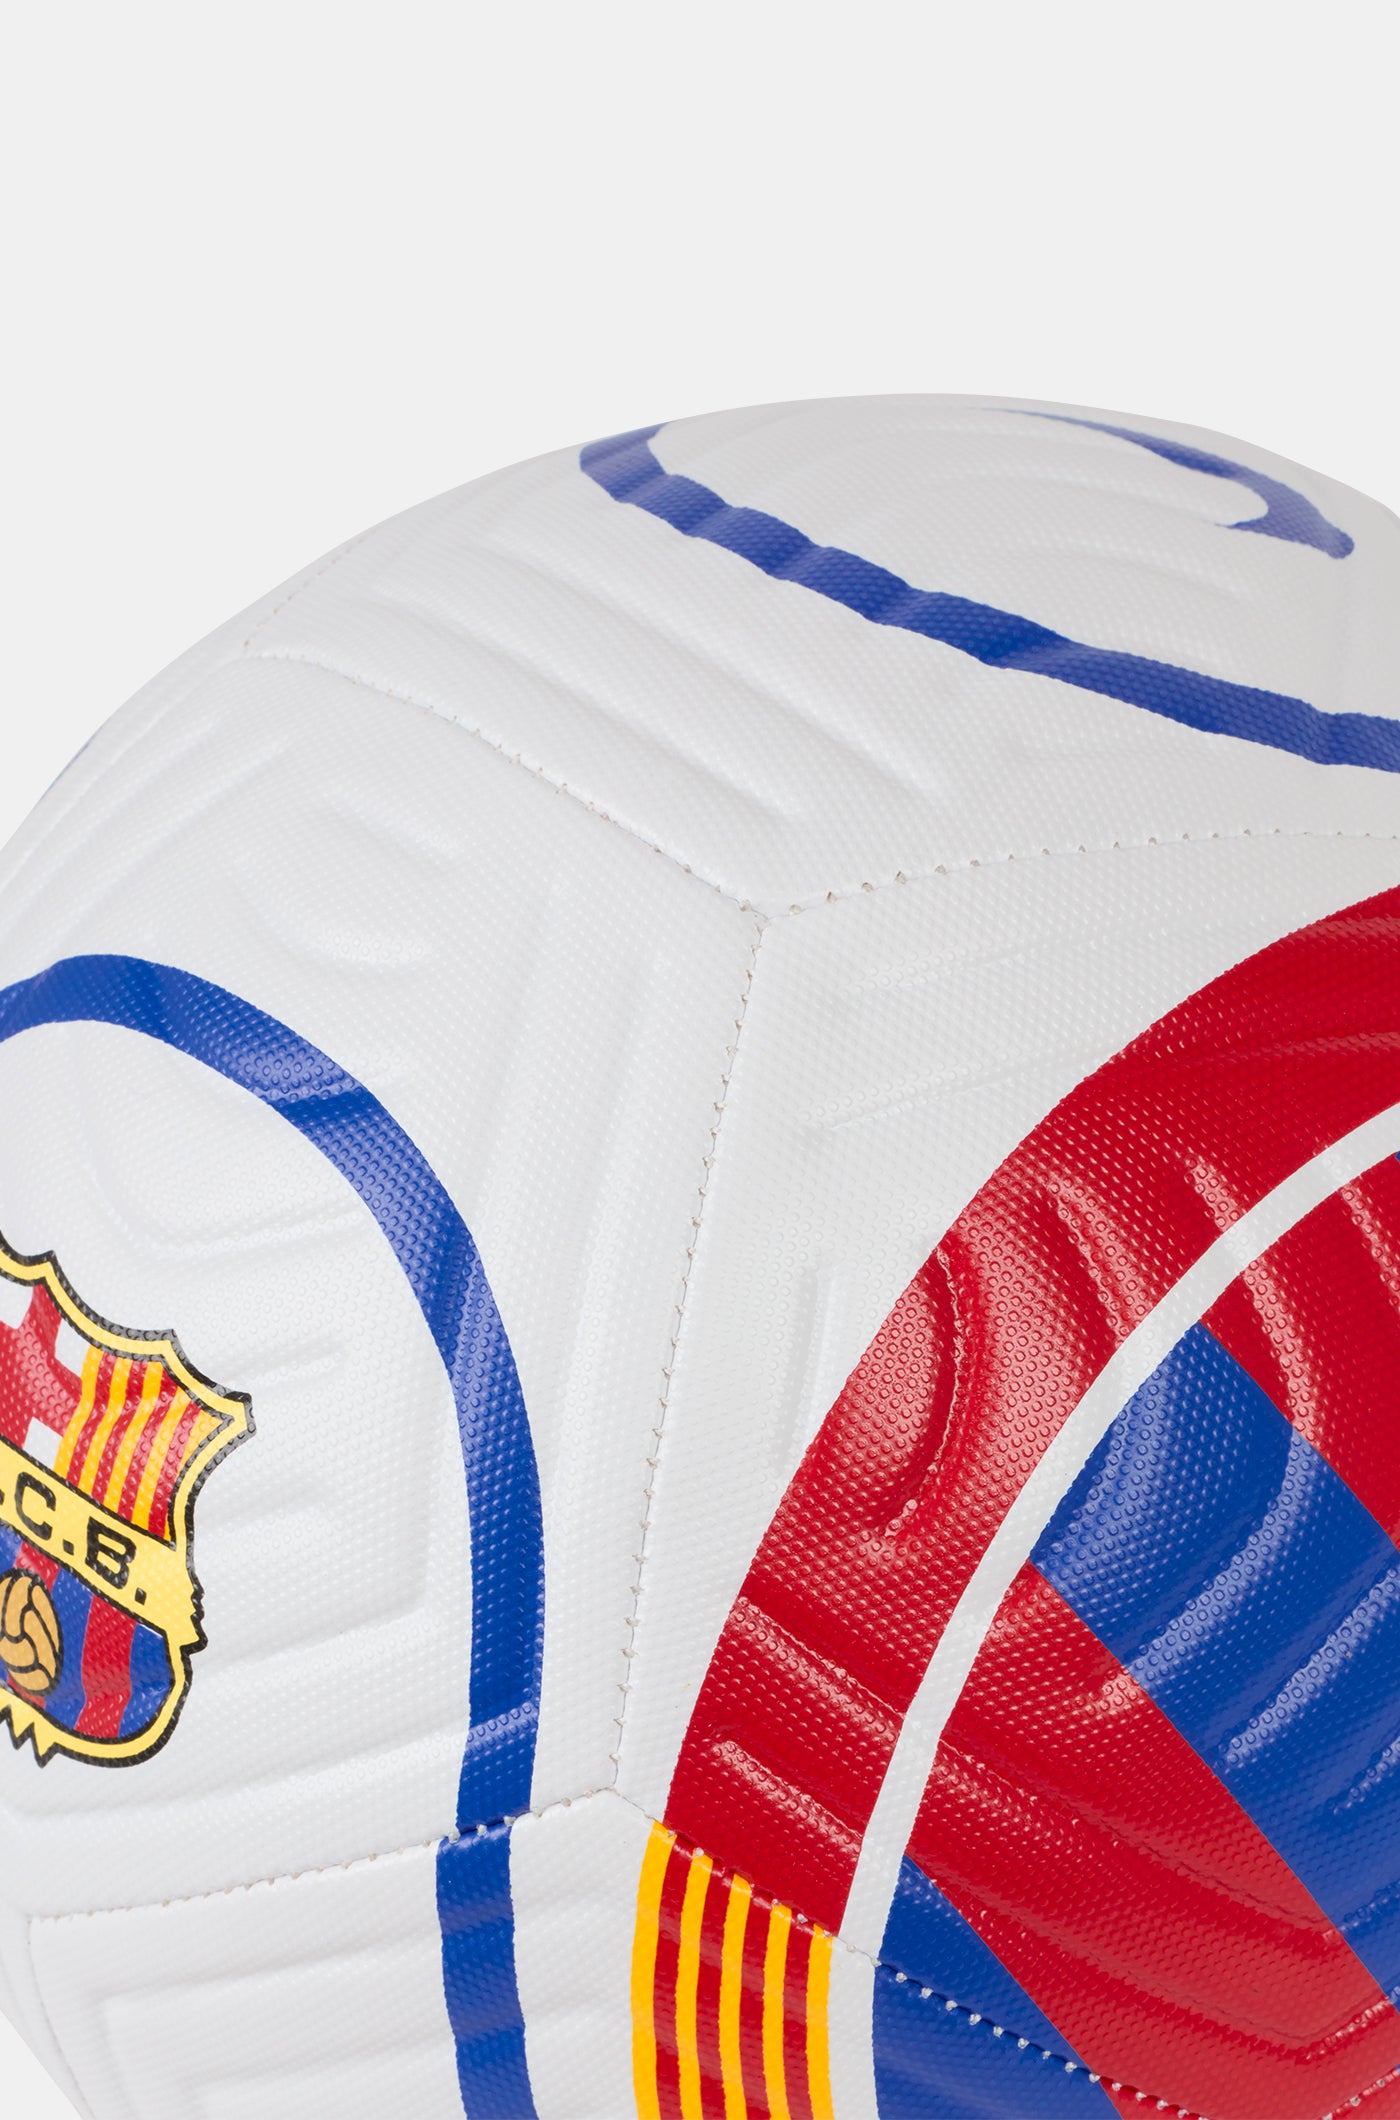 Ballon Domicile 23/24 Baça Nike – Barça Official Store Spotify Camp Nou